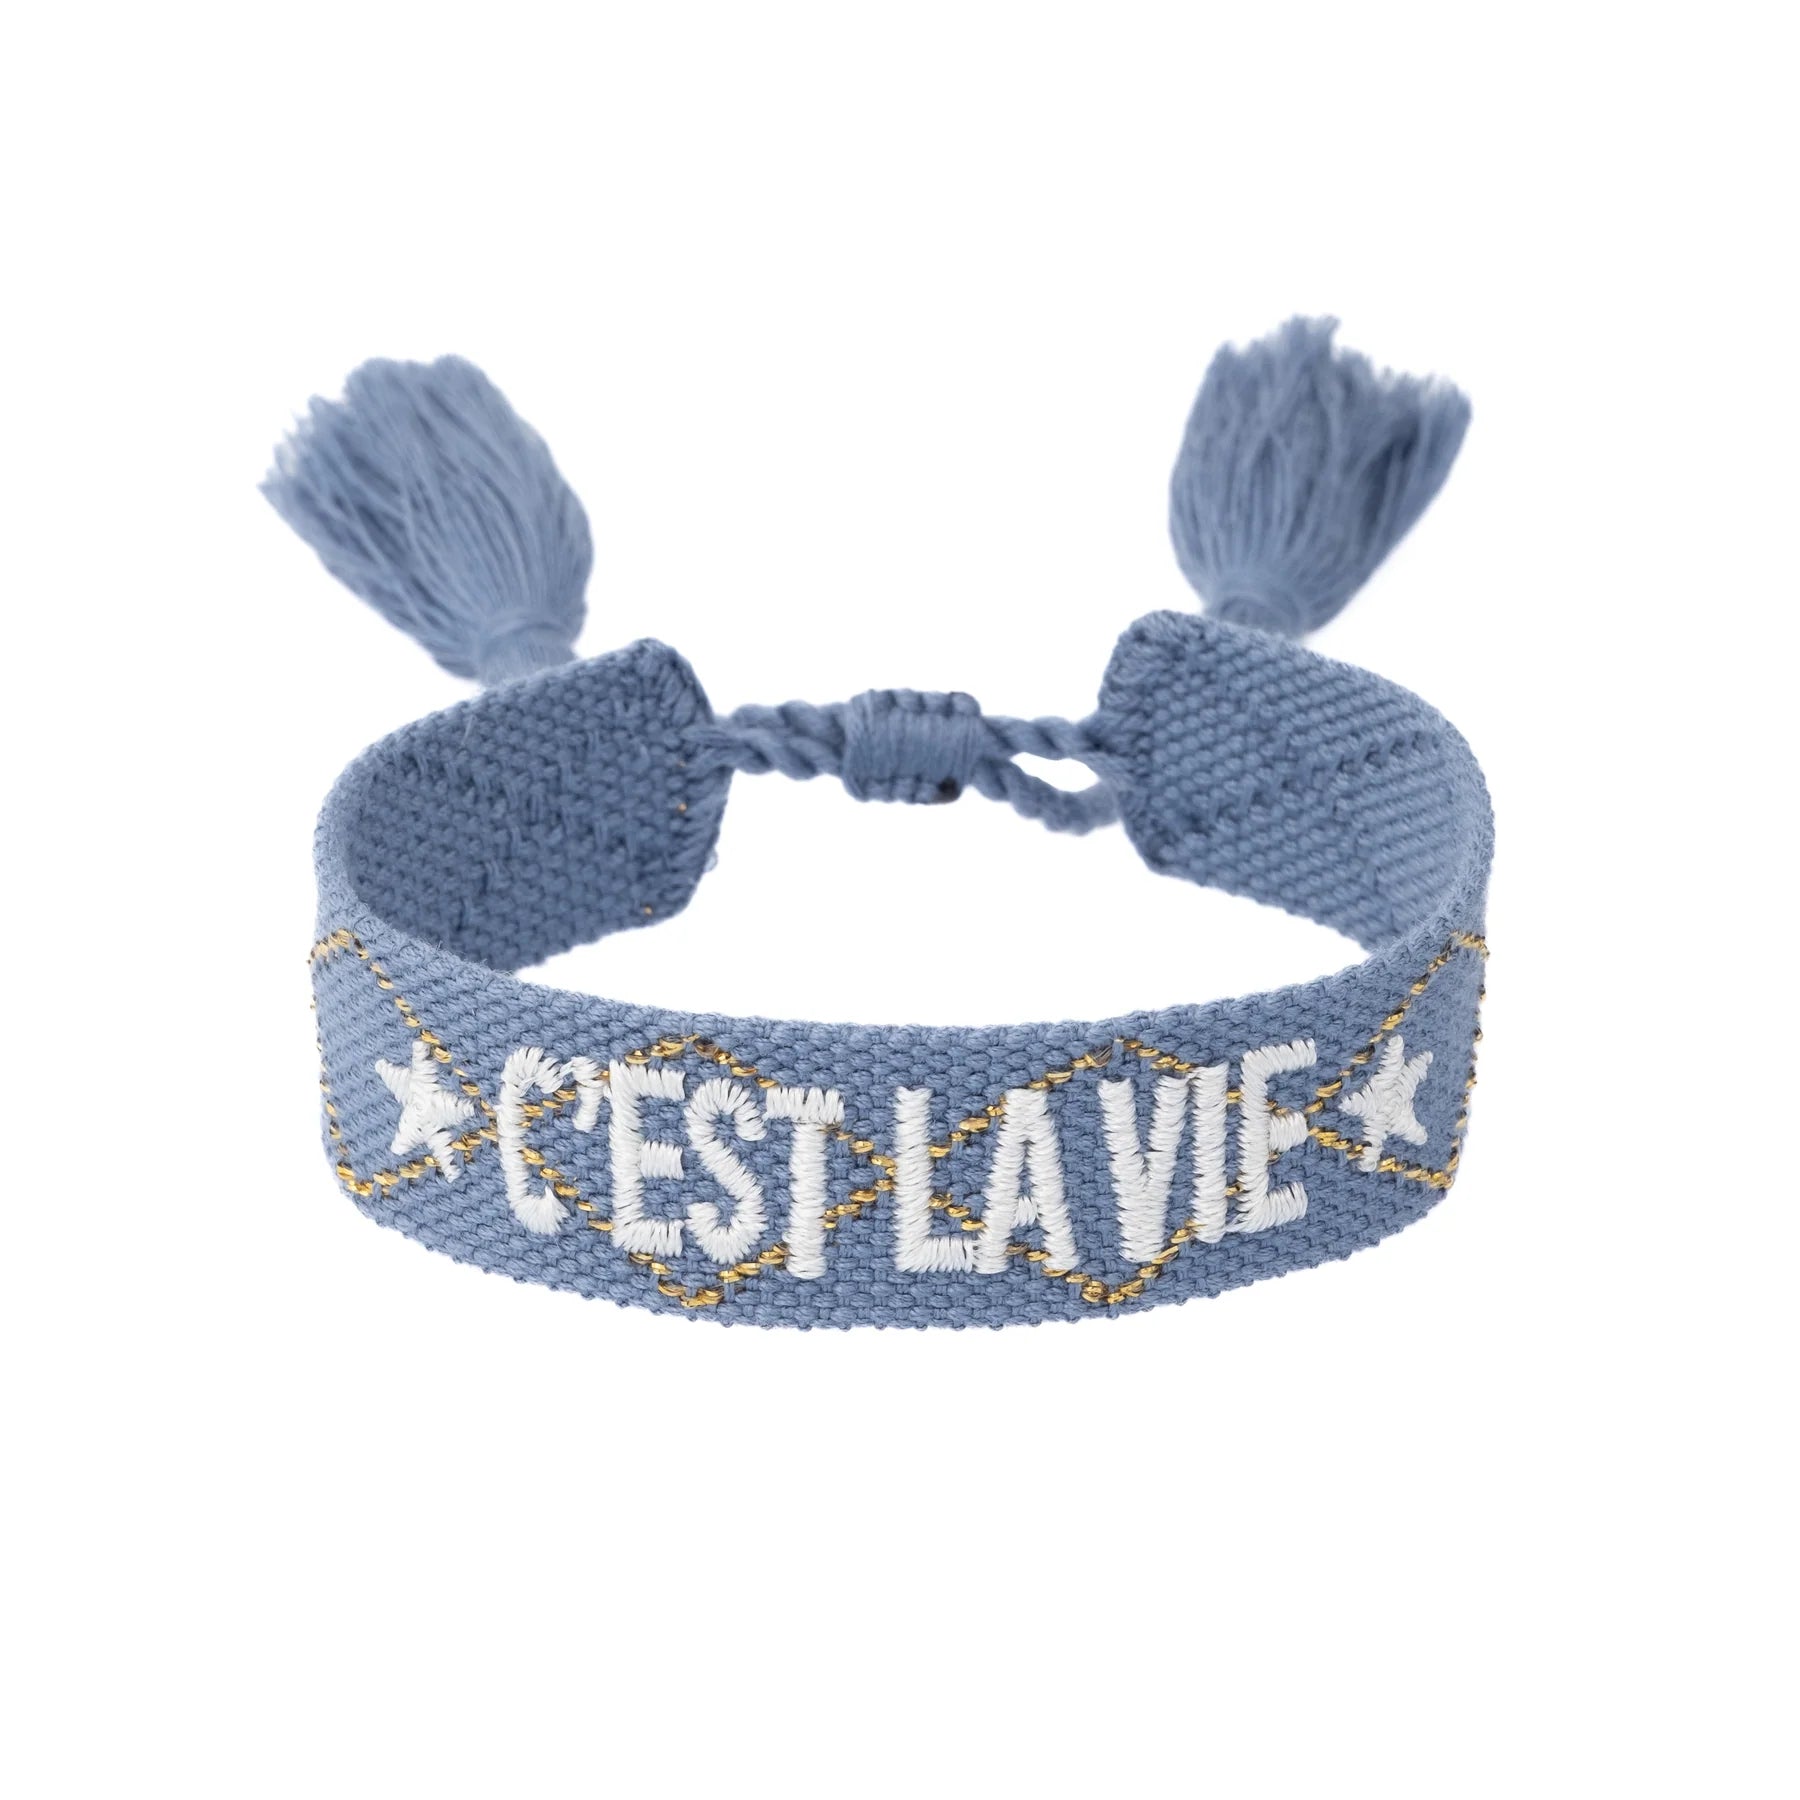 Woven Bracelet "Ce La Vie" Light Blue w/ Gold